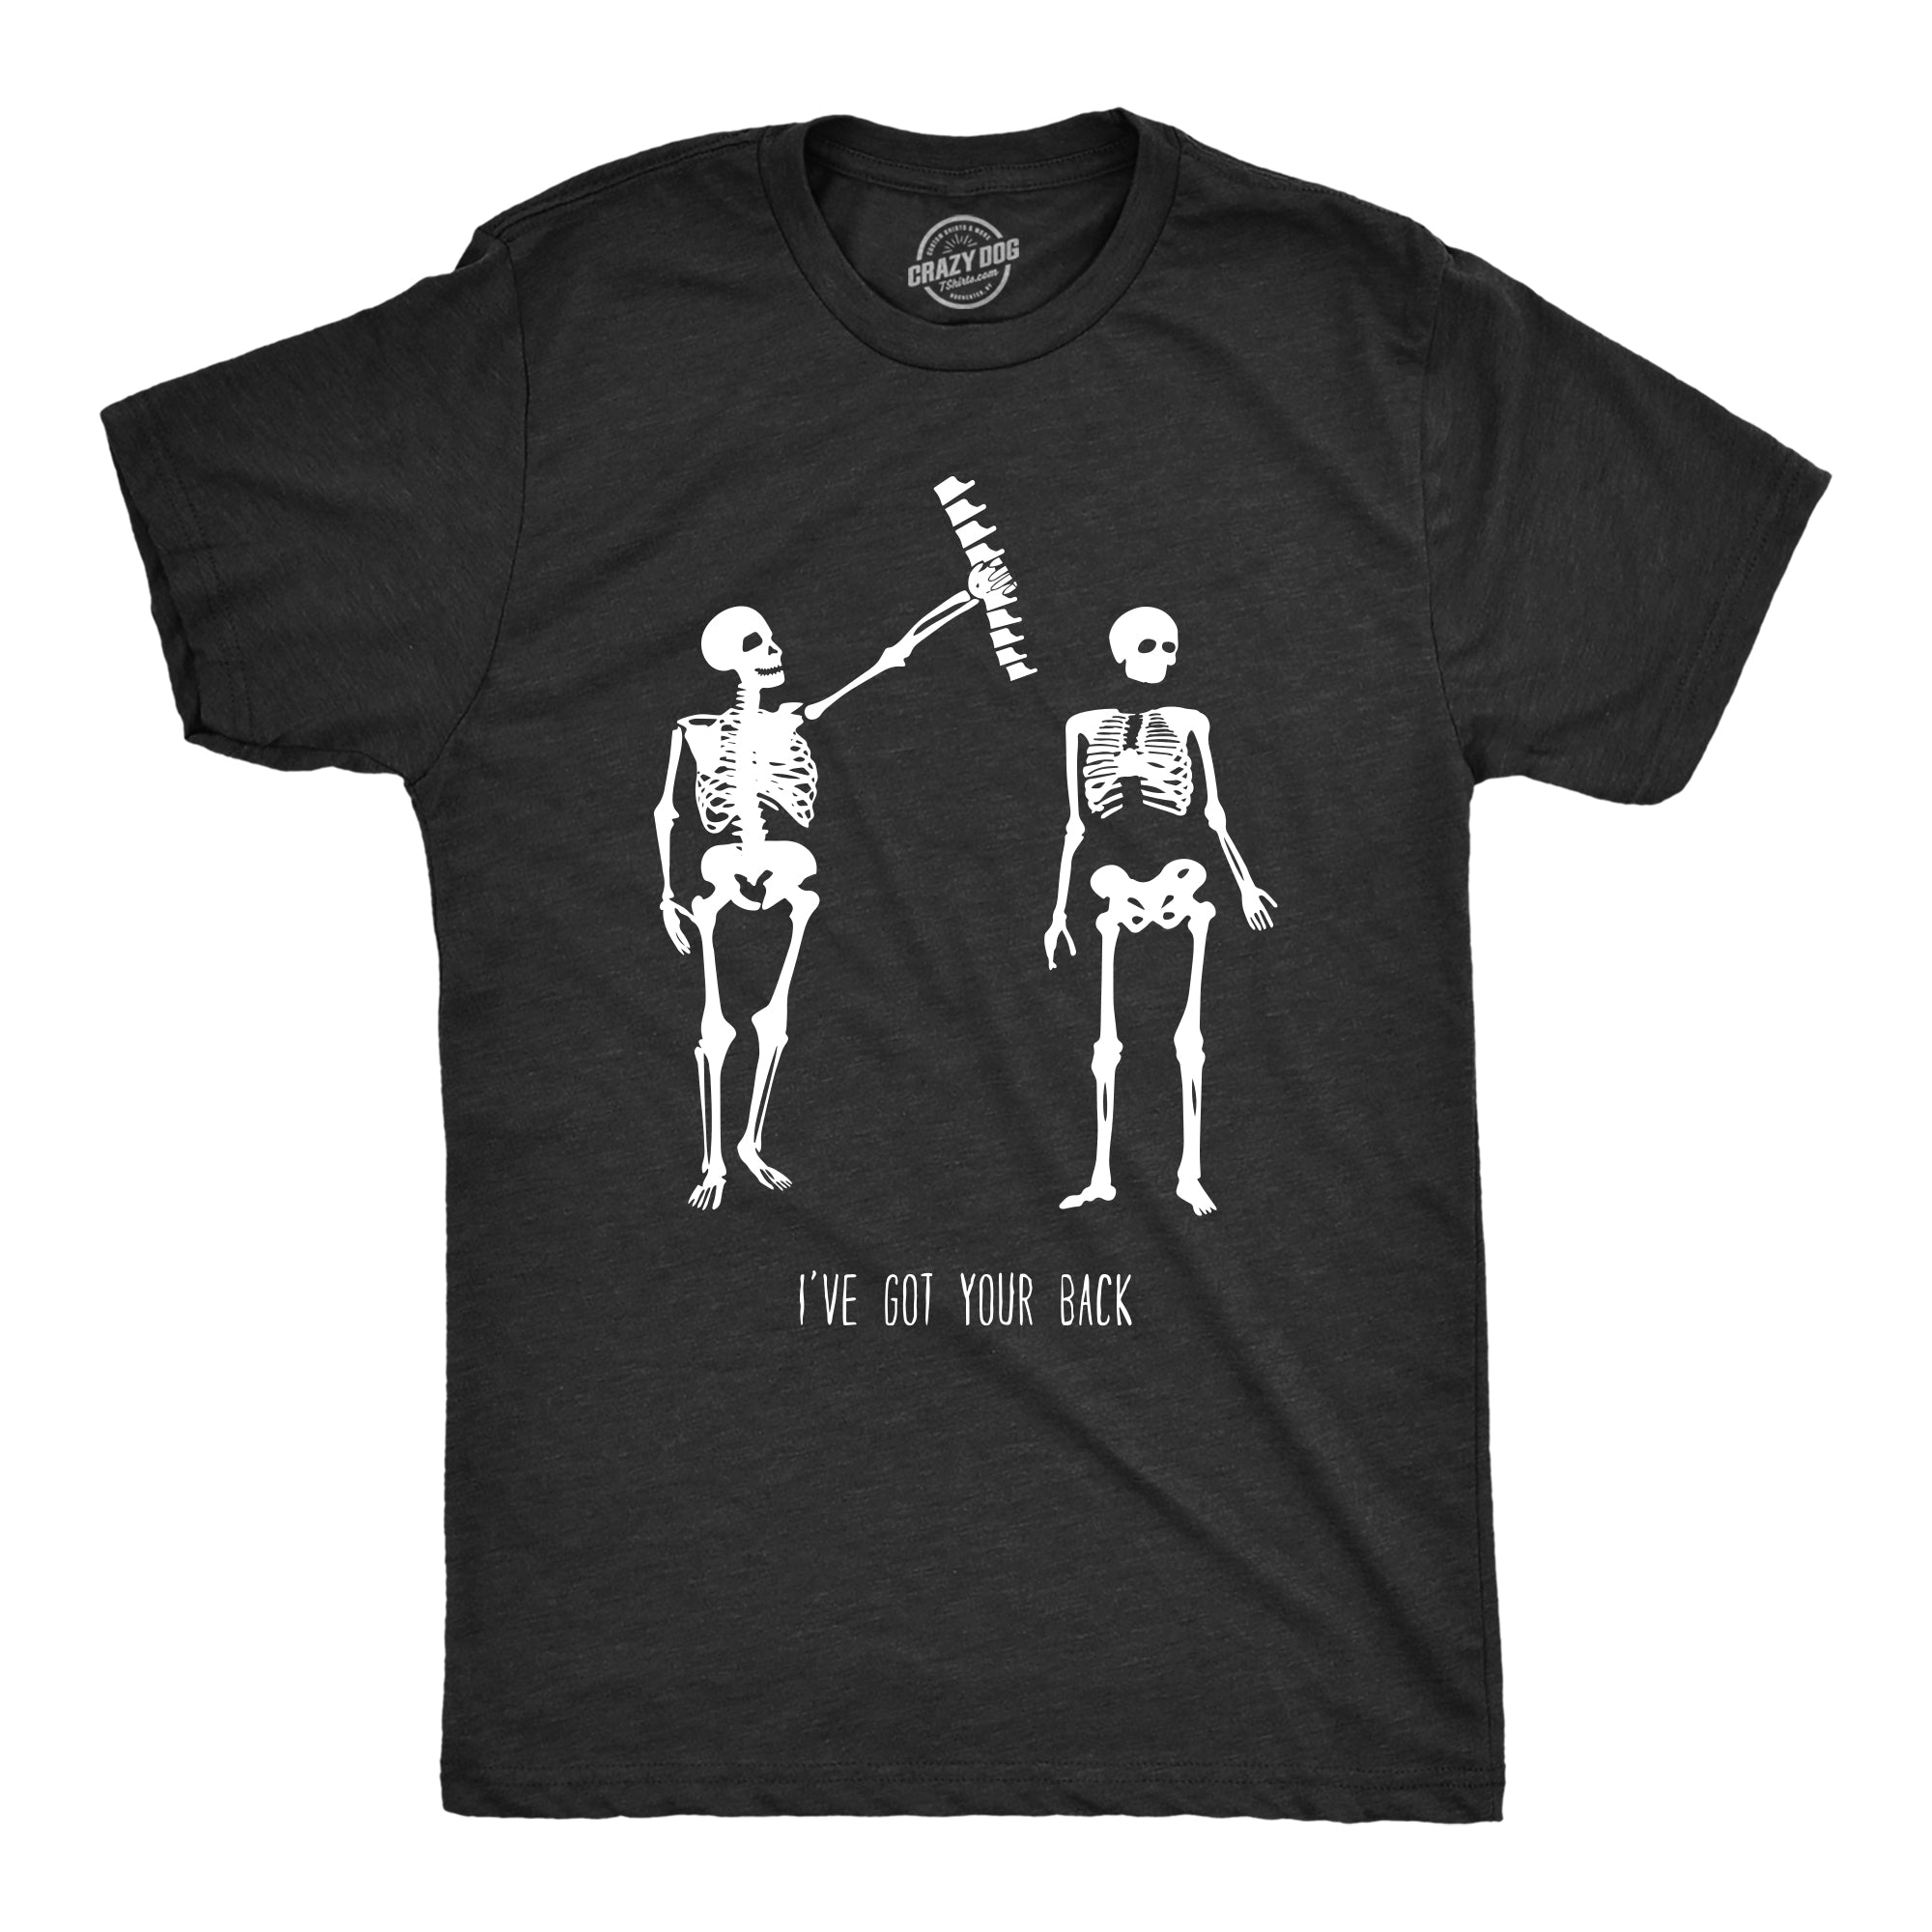 Funny Black Got Your Back Skeleton Mens T Shirt Nerdy Halloween Tee